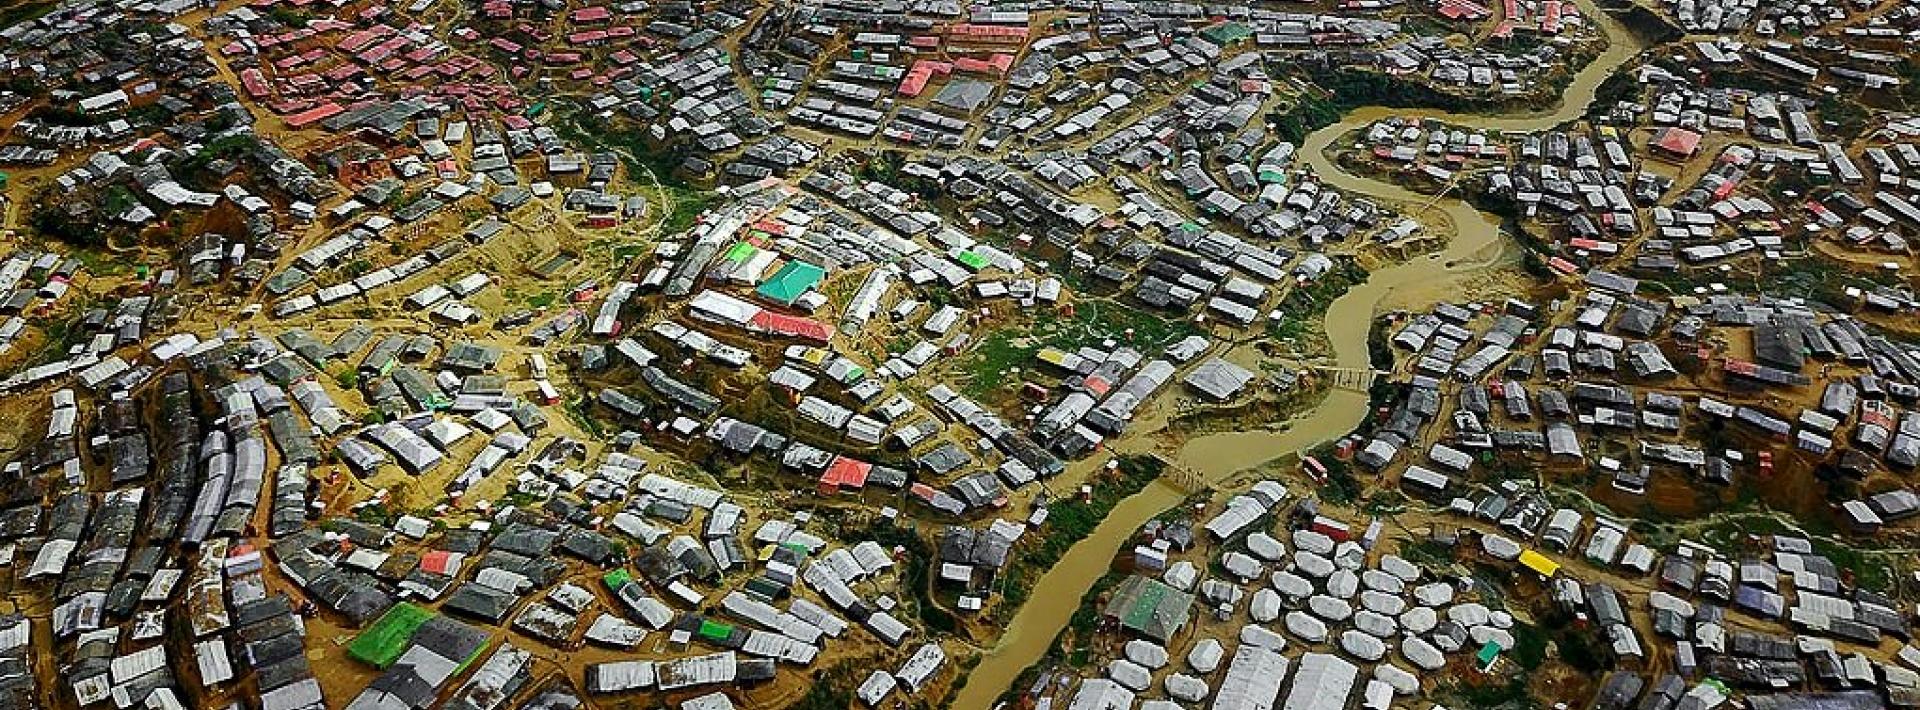 Rohingya camp overview